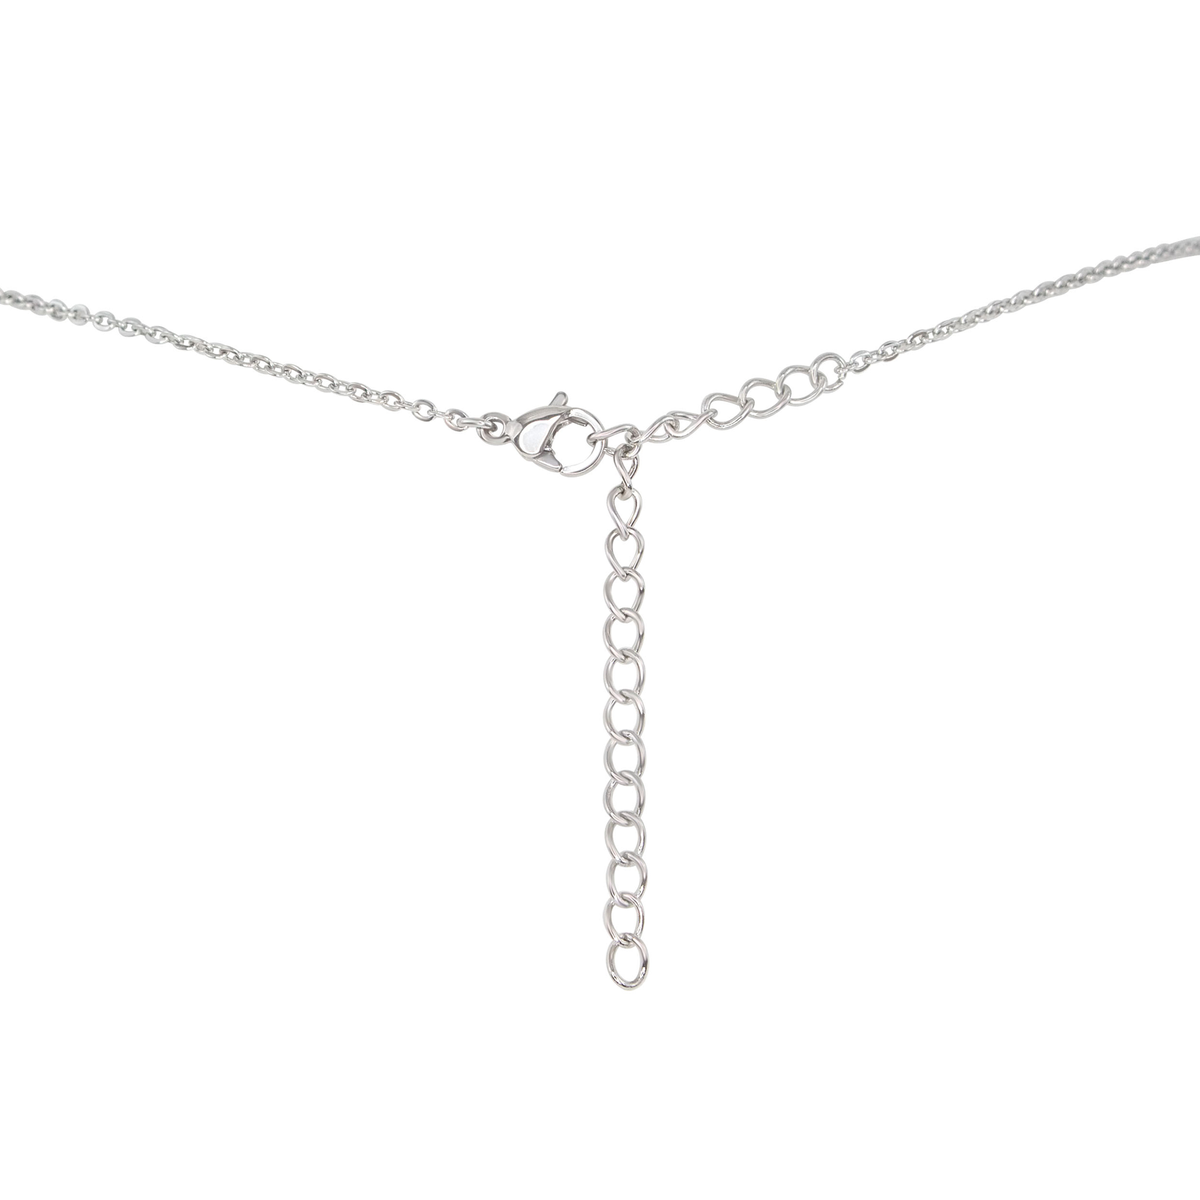 Raw Labradorite Natural Crystal Pendant Necklace